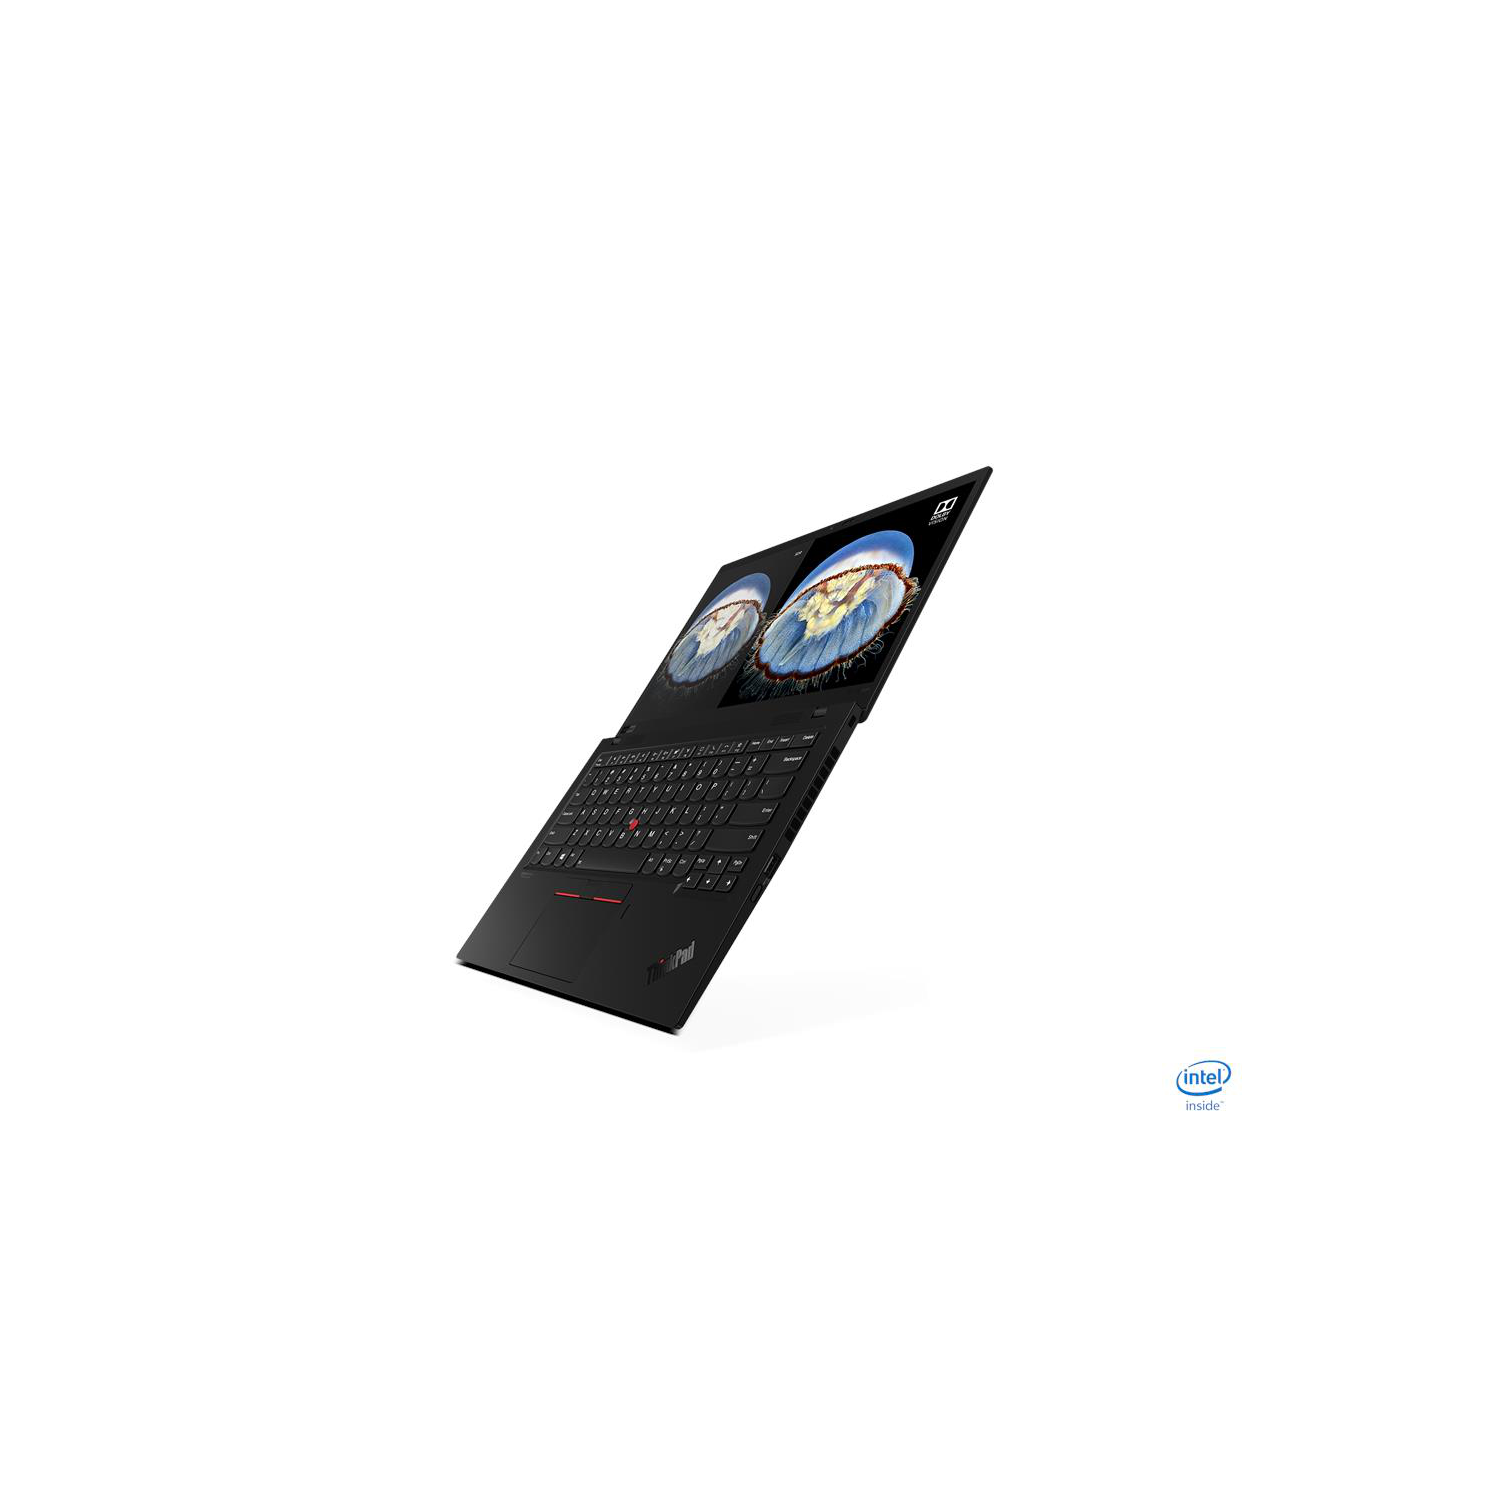 Lenovo ThinkPad X1 Carbon Gen 8 - Black (Intel Core i5-10210U/256 GB SSD/8 GB RAM/Windows 10)-English- (20U9003VUS)